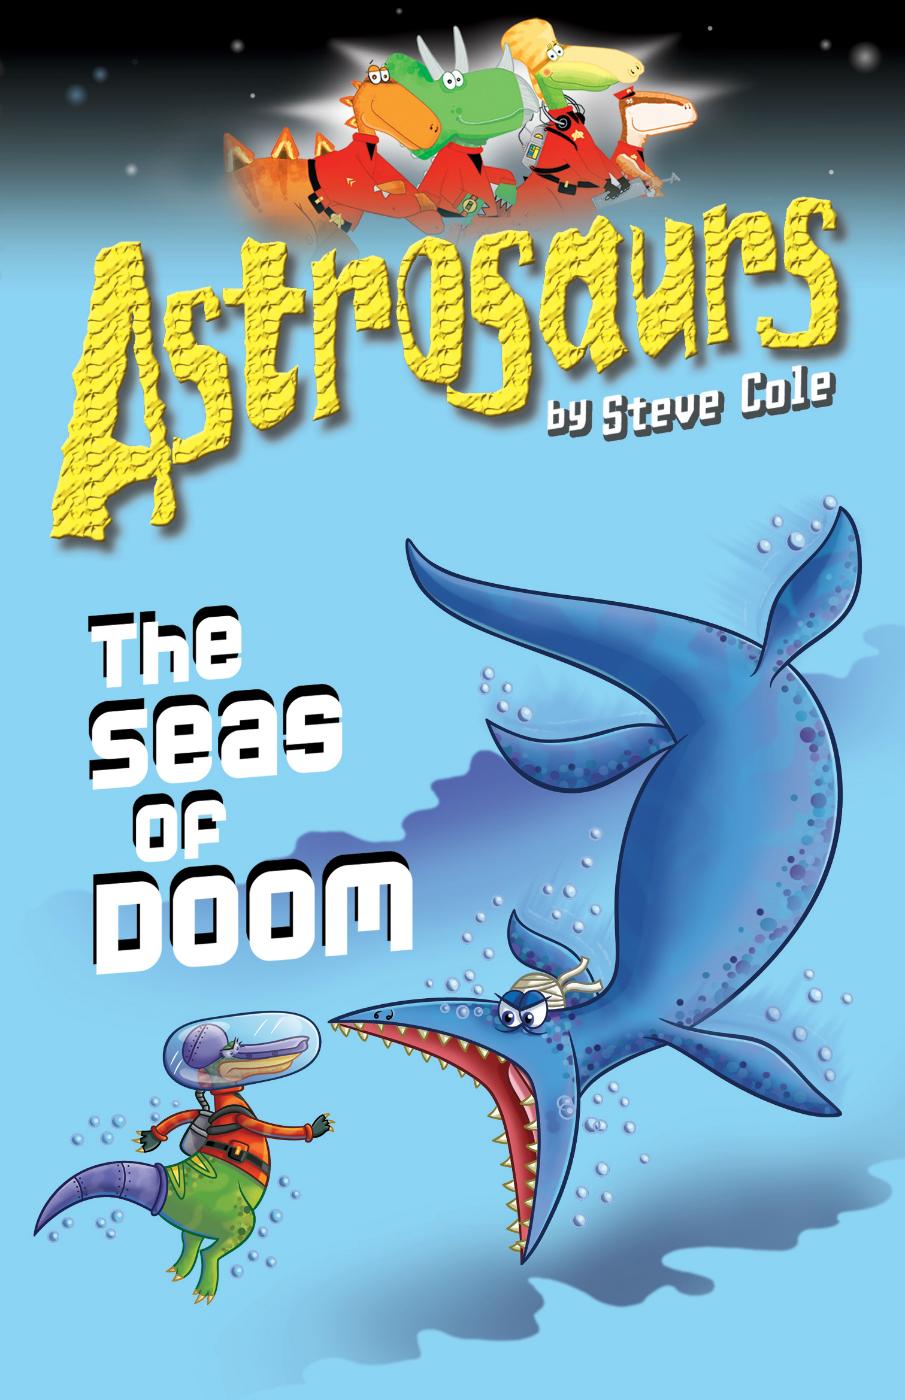 Astrosaurs 3 by Steve Cole